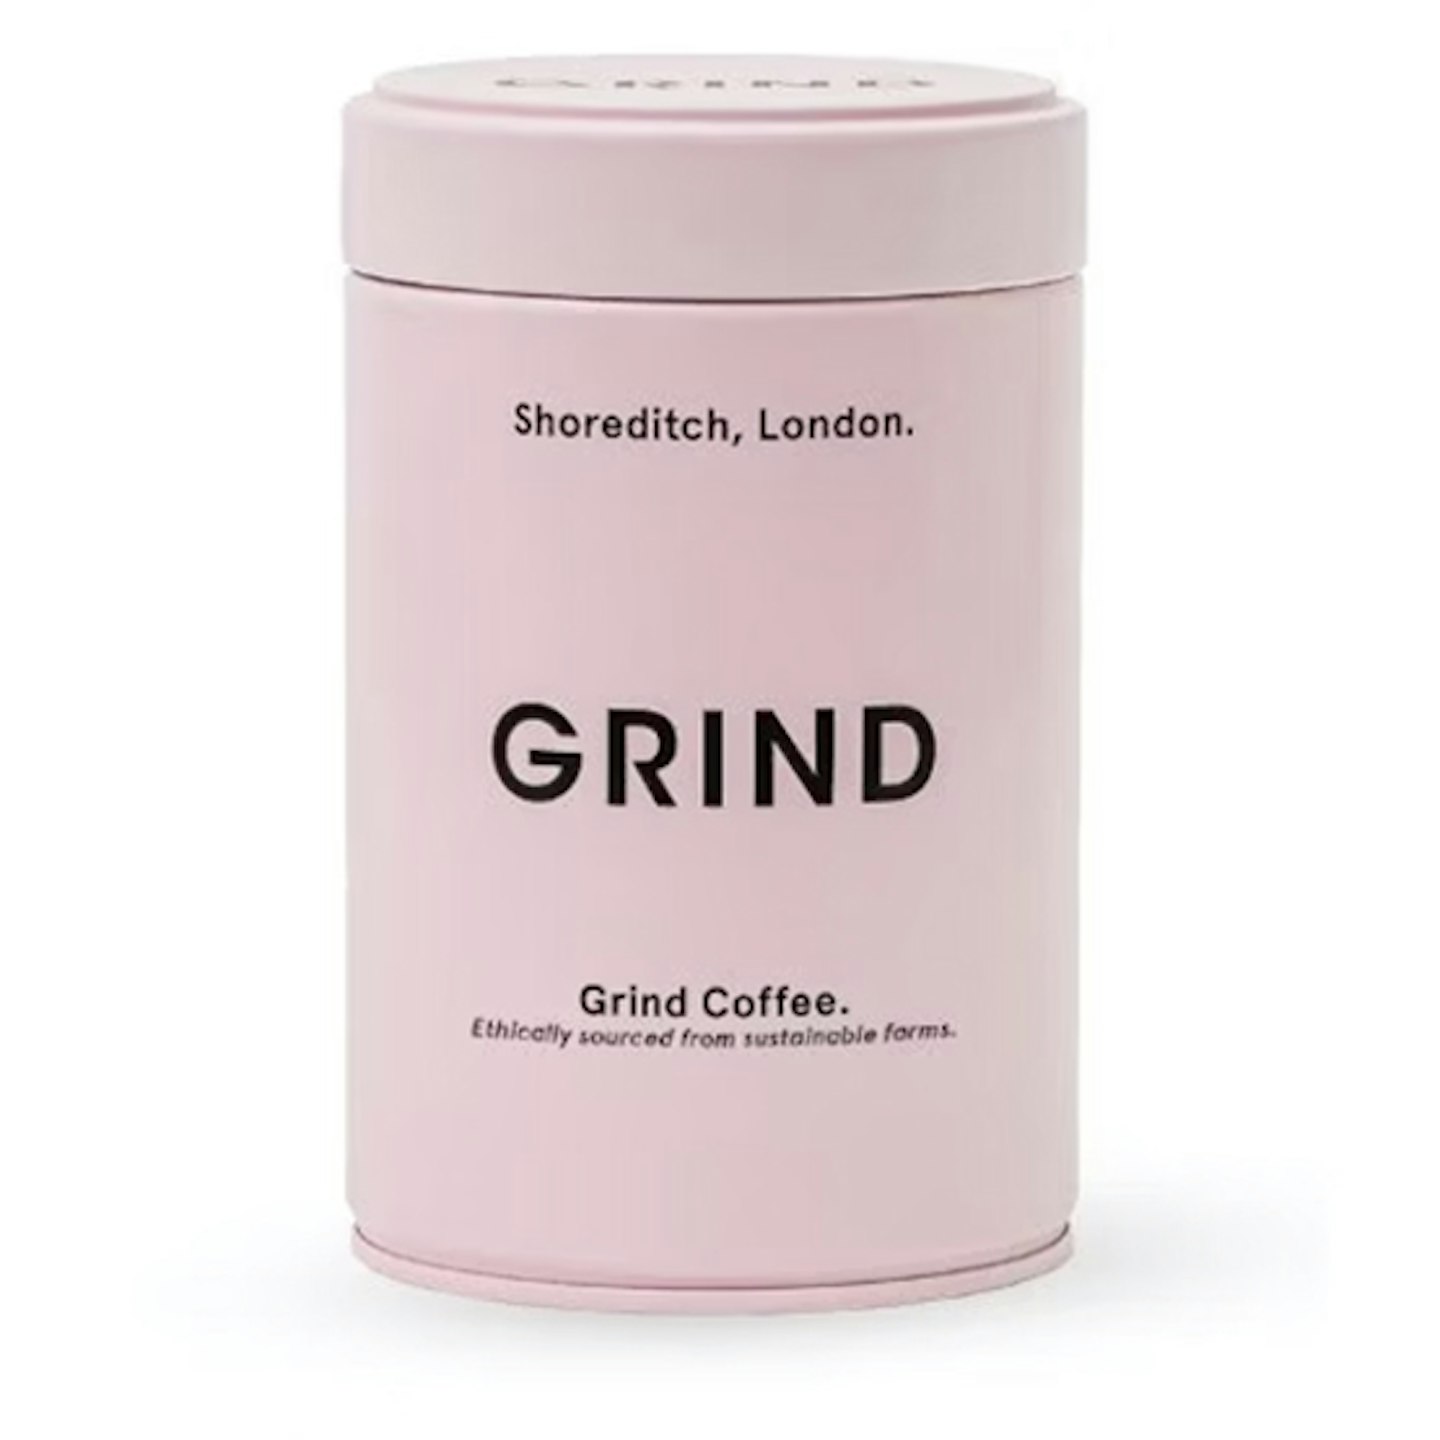 grind-coffee-tin copy